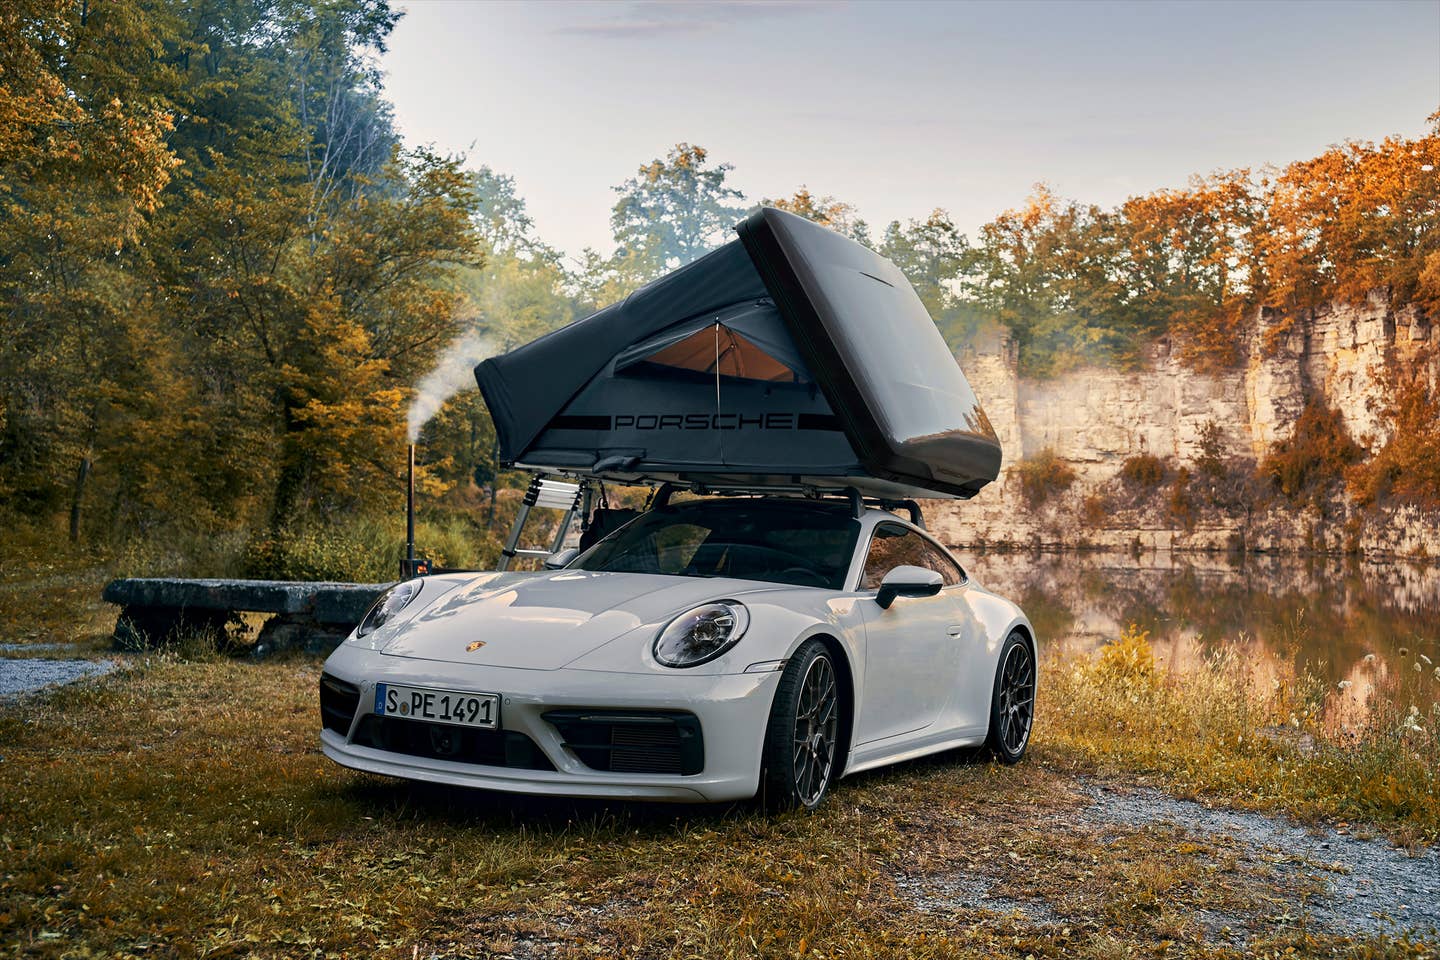 Porsche 911 with roof tent